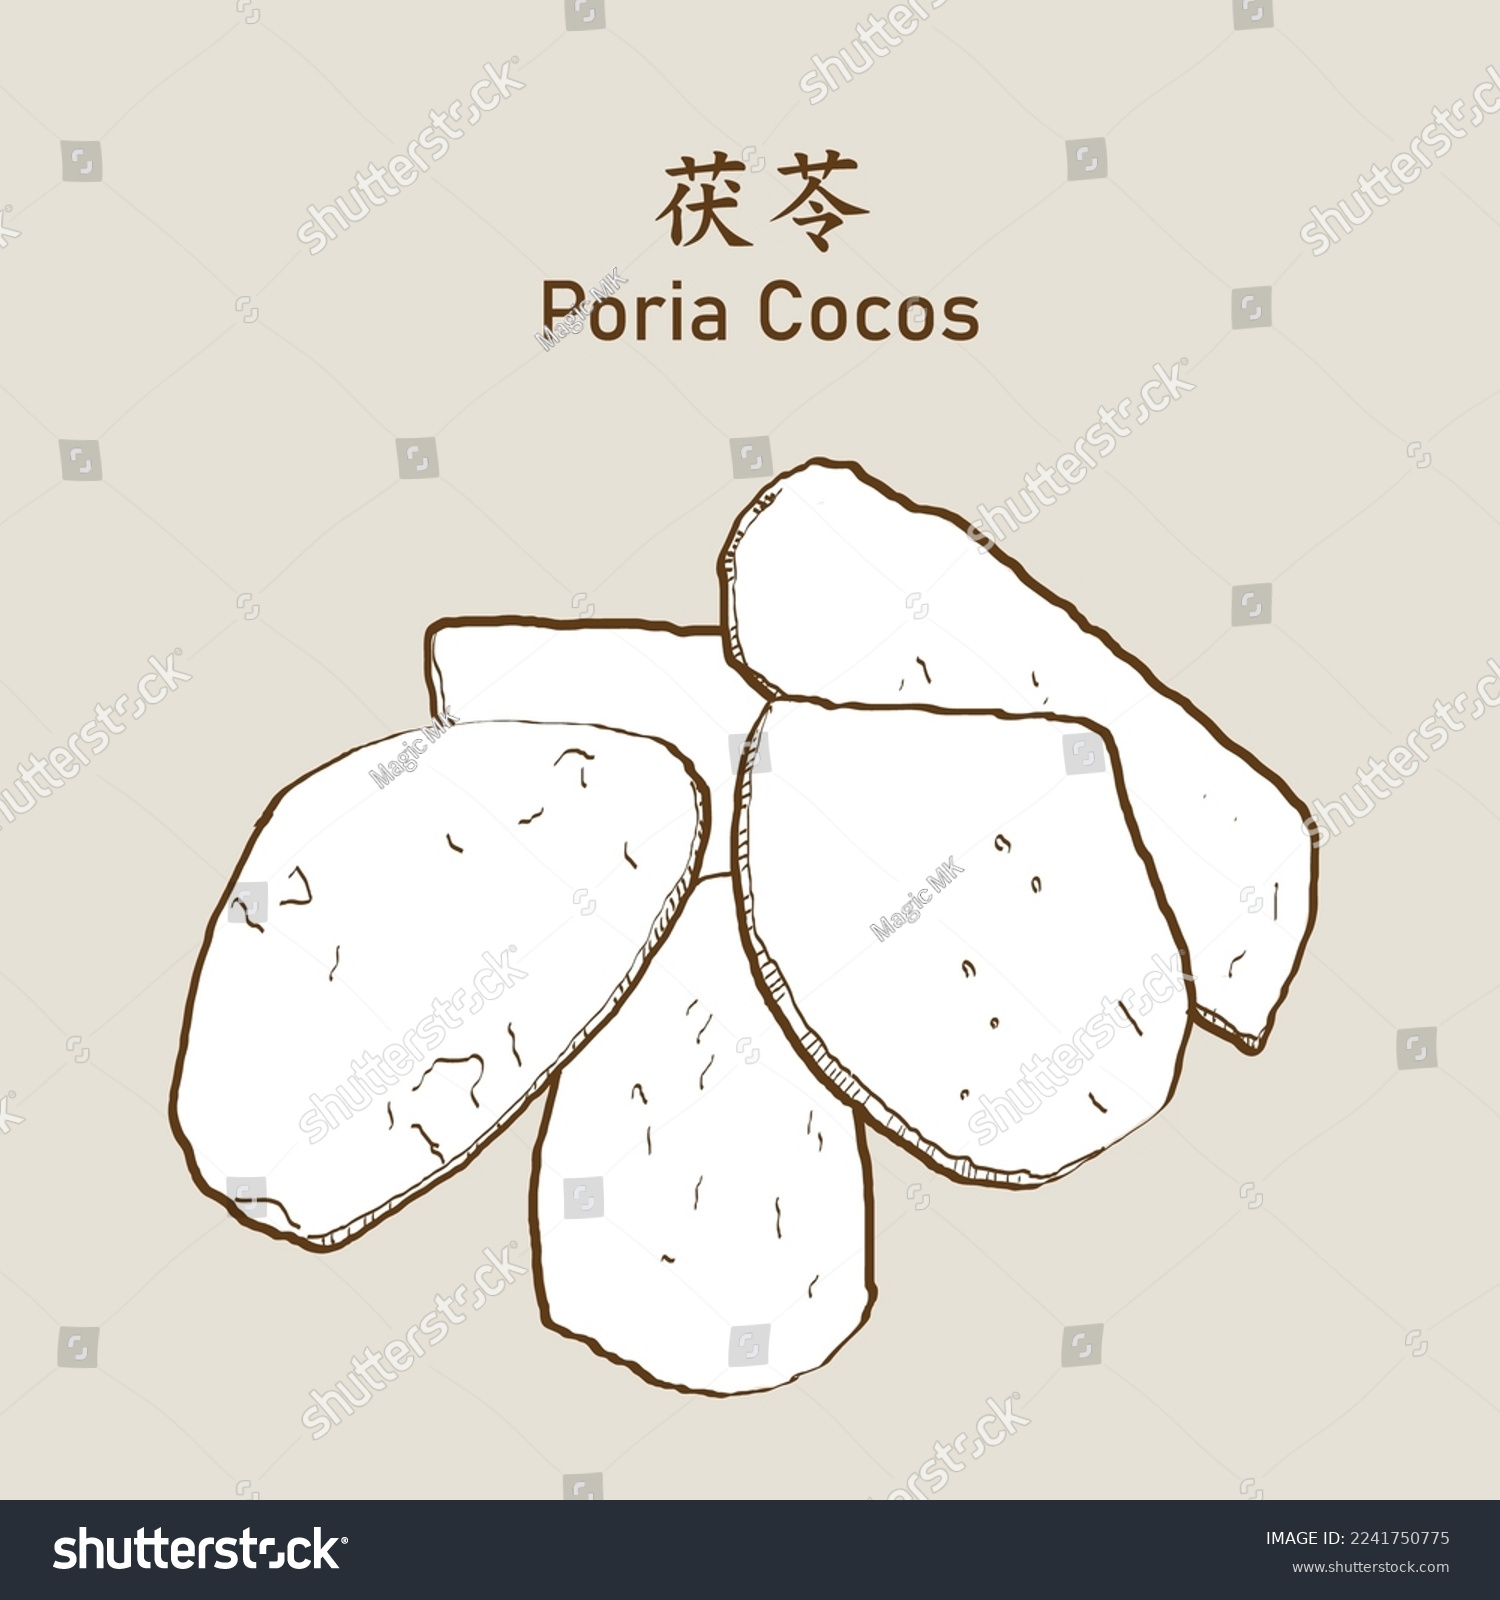 SVG of Poria cocos, Wolfiporia extensa Peck Ginns or Poria cocos F. A. Wolf. 茯苓. Vector Illustration EPS 10. svg